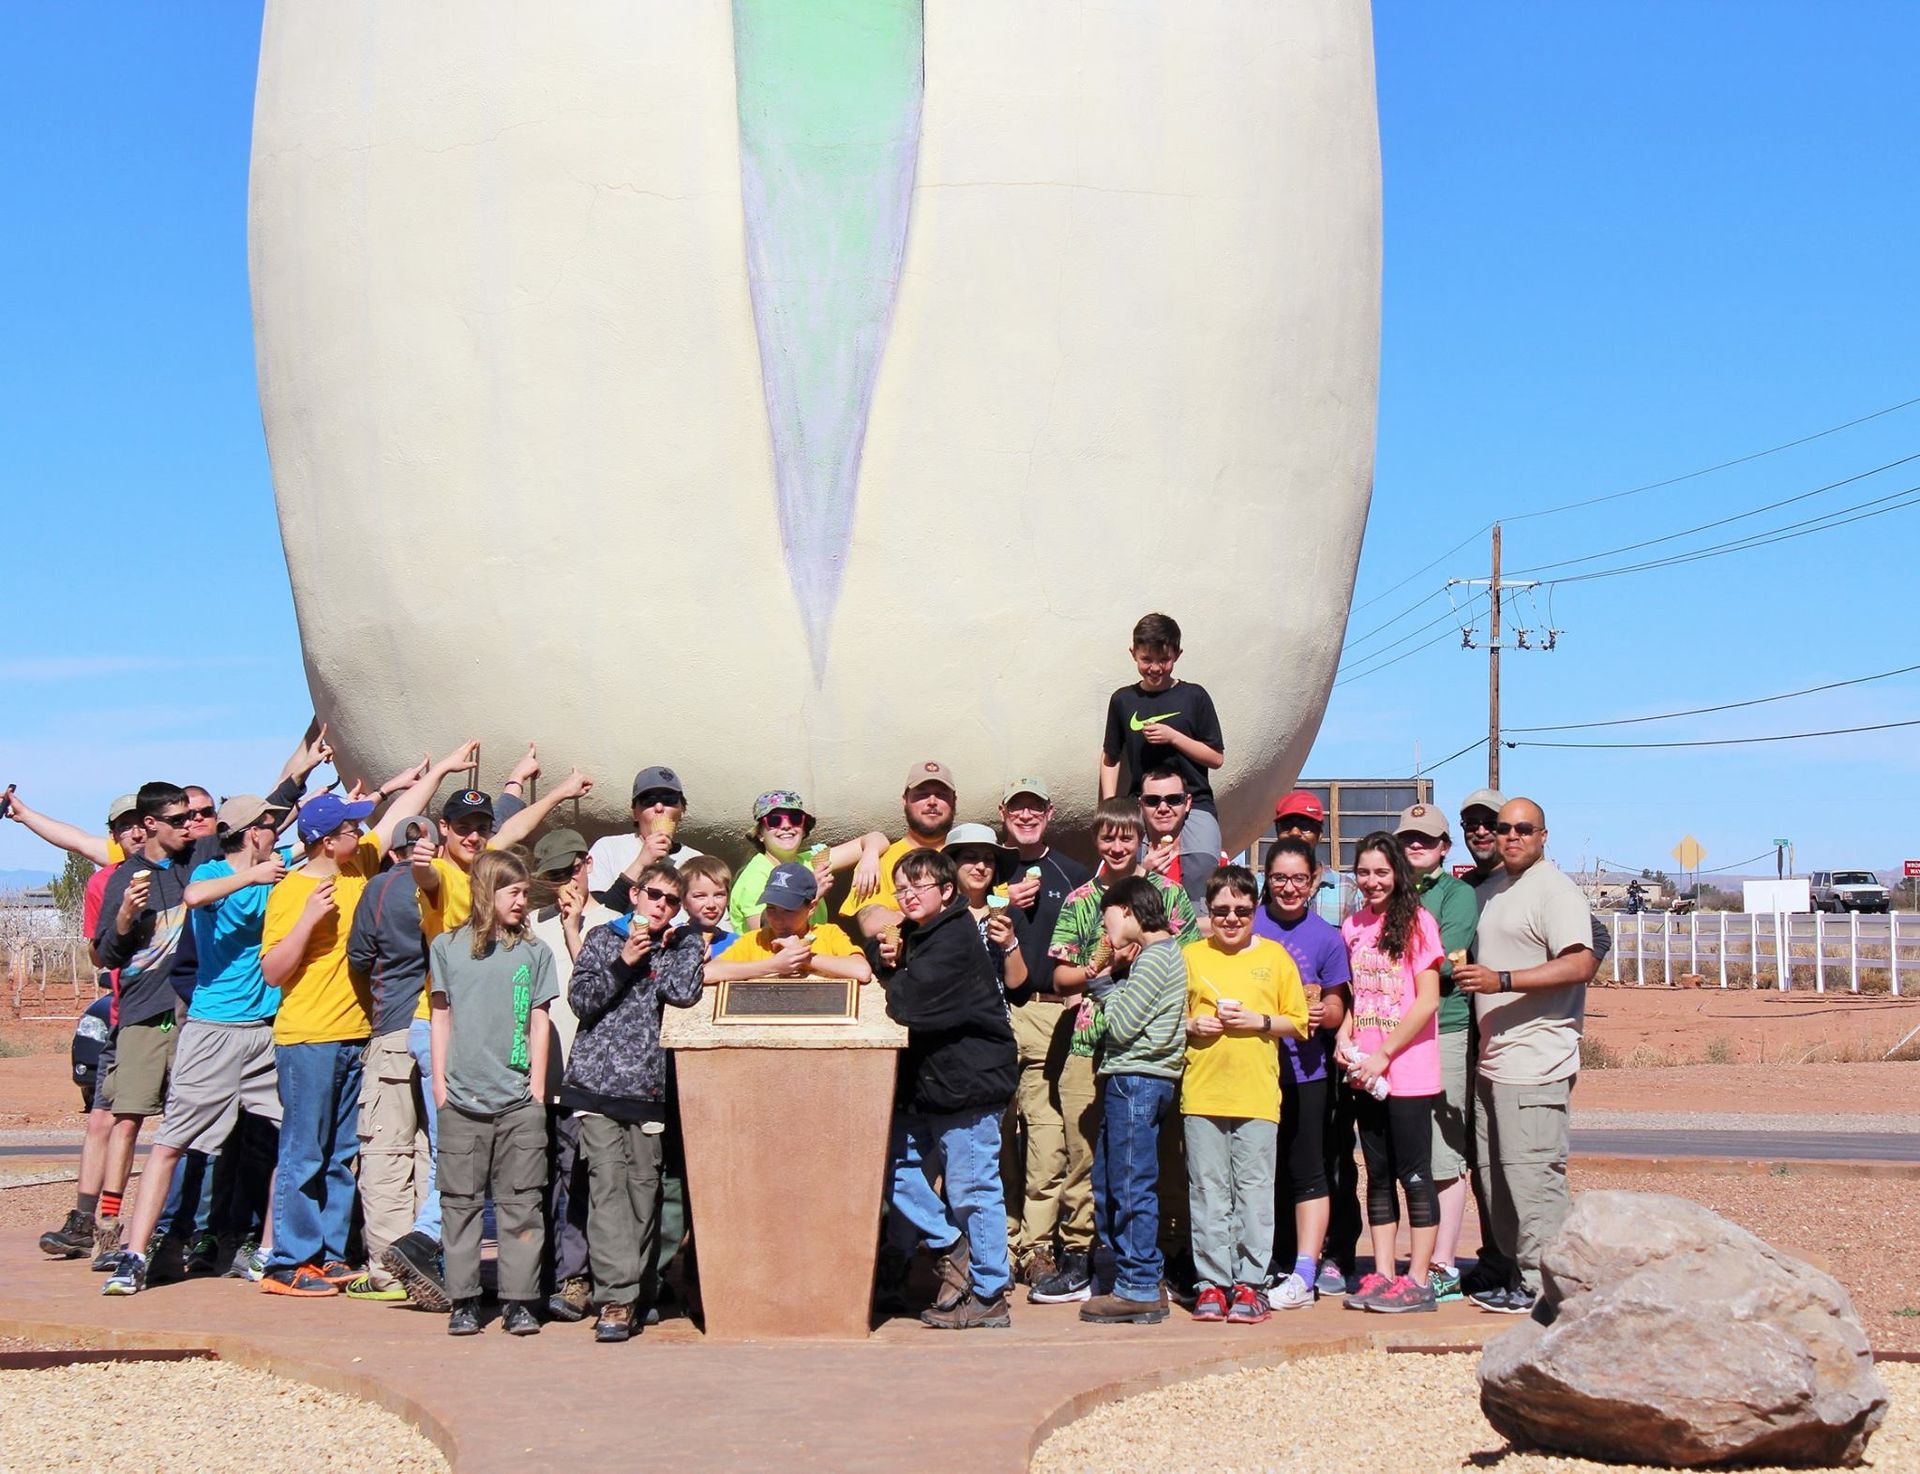 
World’s Largest Pistachio Monument, world record in North Alamogordo, New Mexico